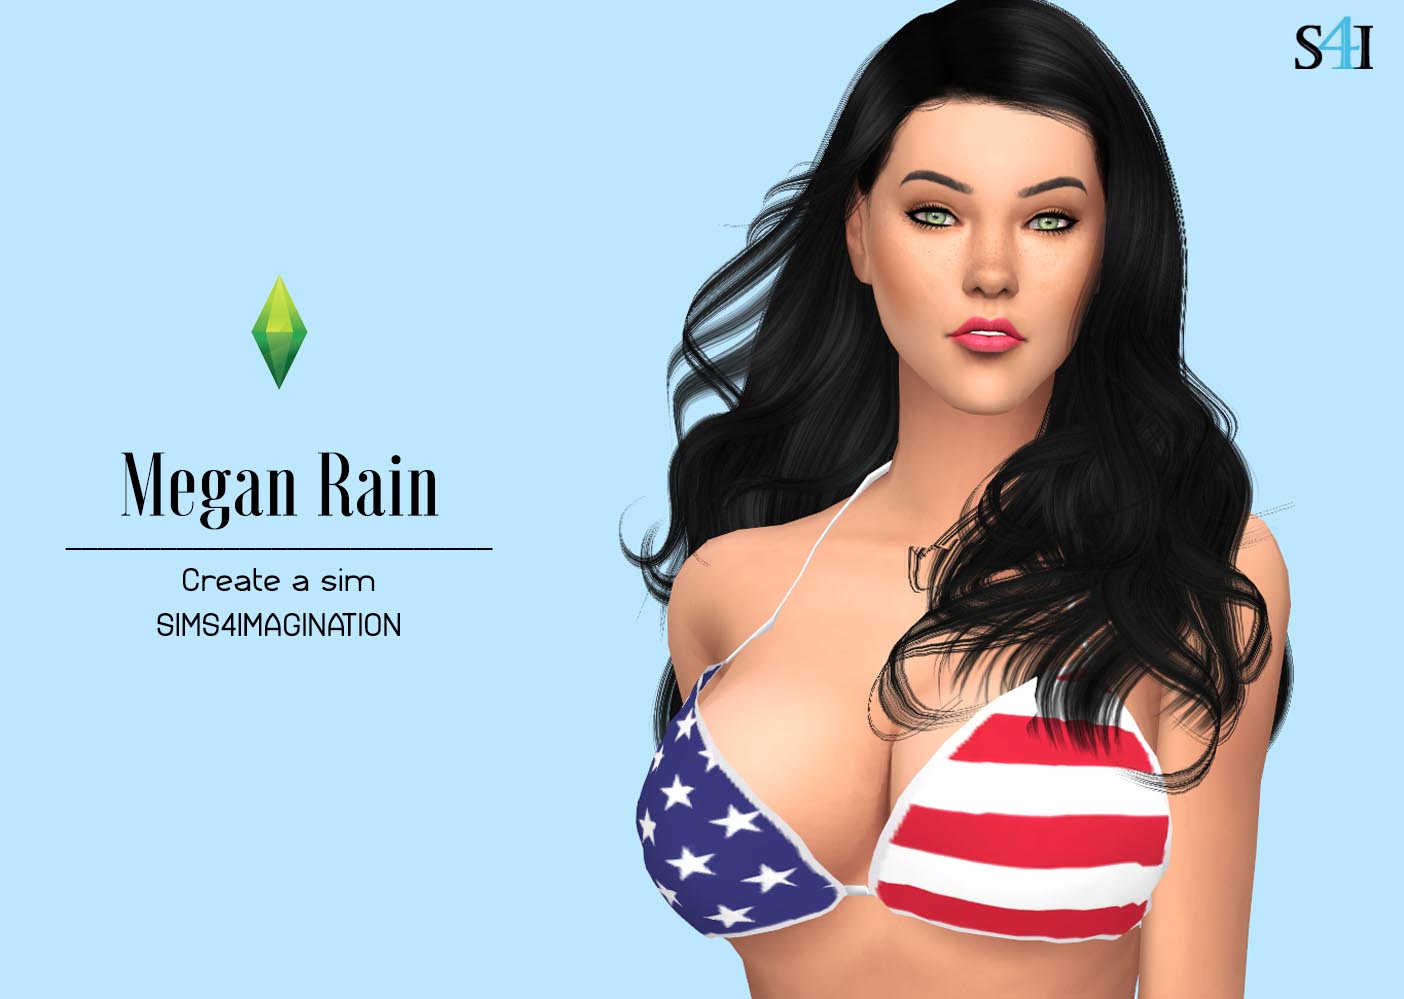 My Sims 4 CAS Megan Rain Imagination.